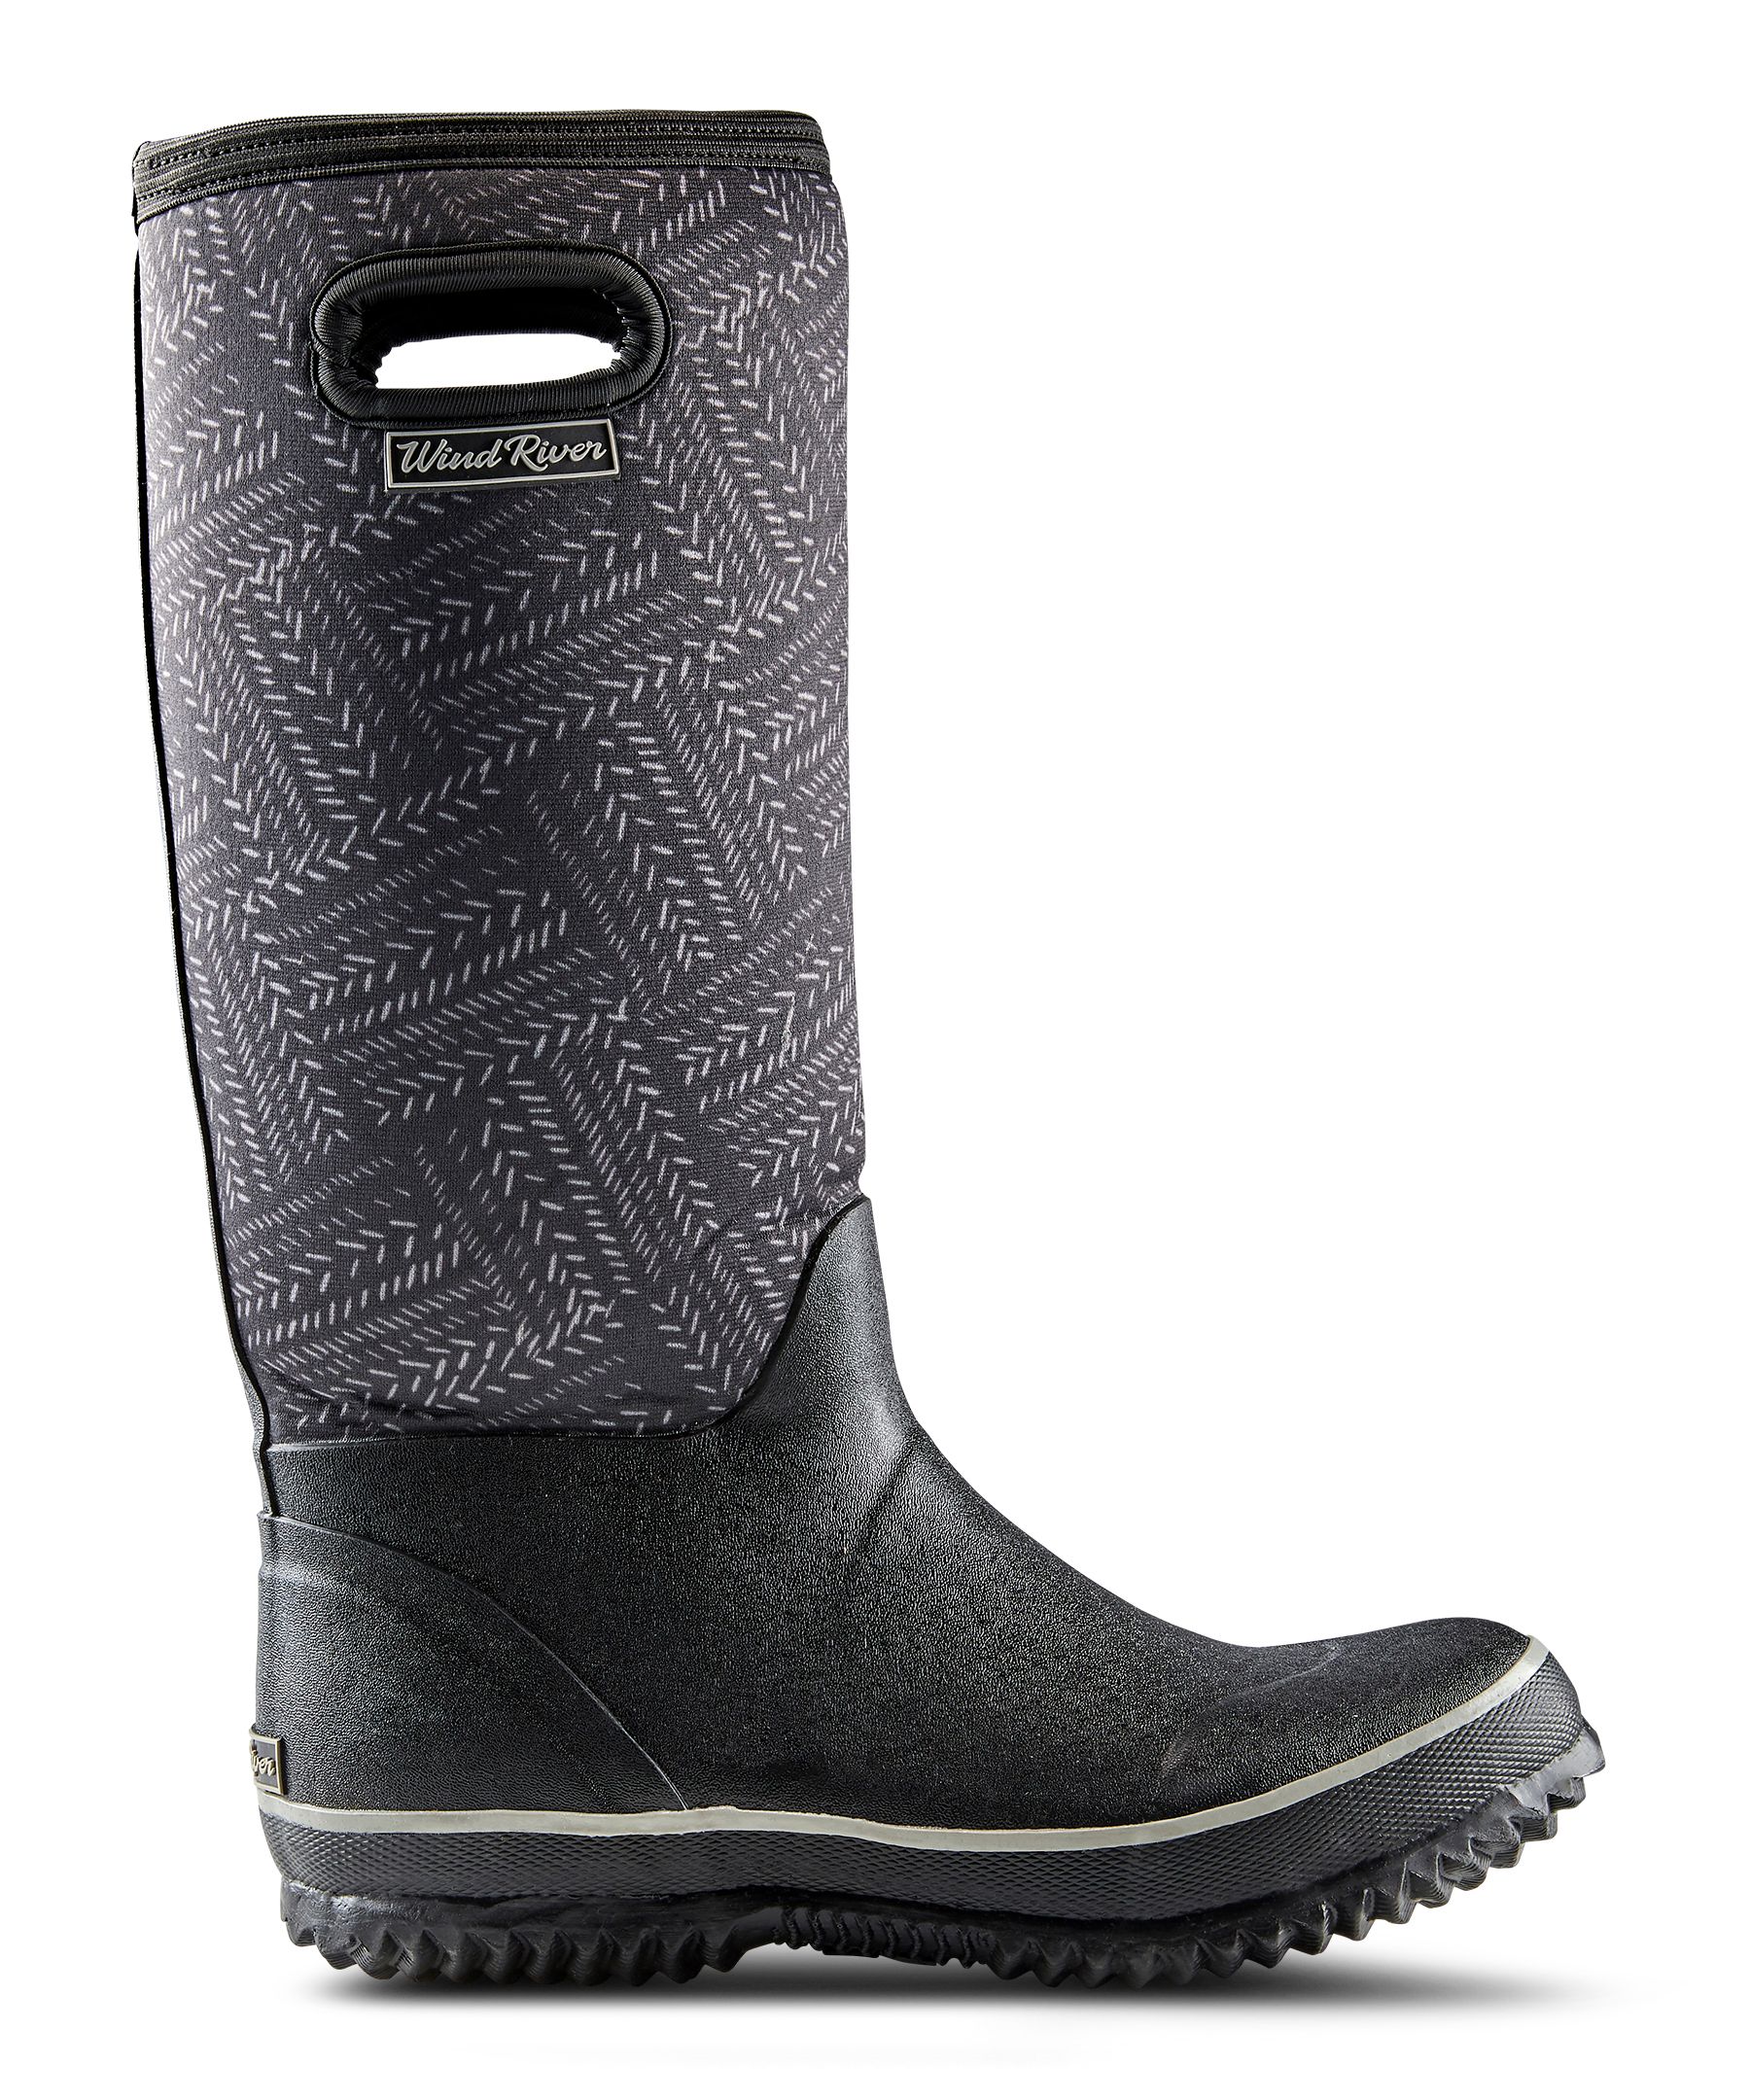 WindRiver Women's Waterproof Storm Neoprene Tall Rubber Boots